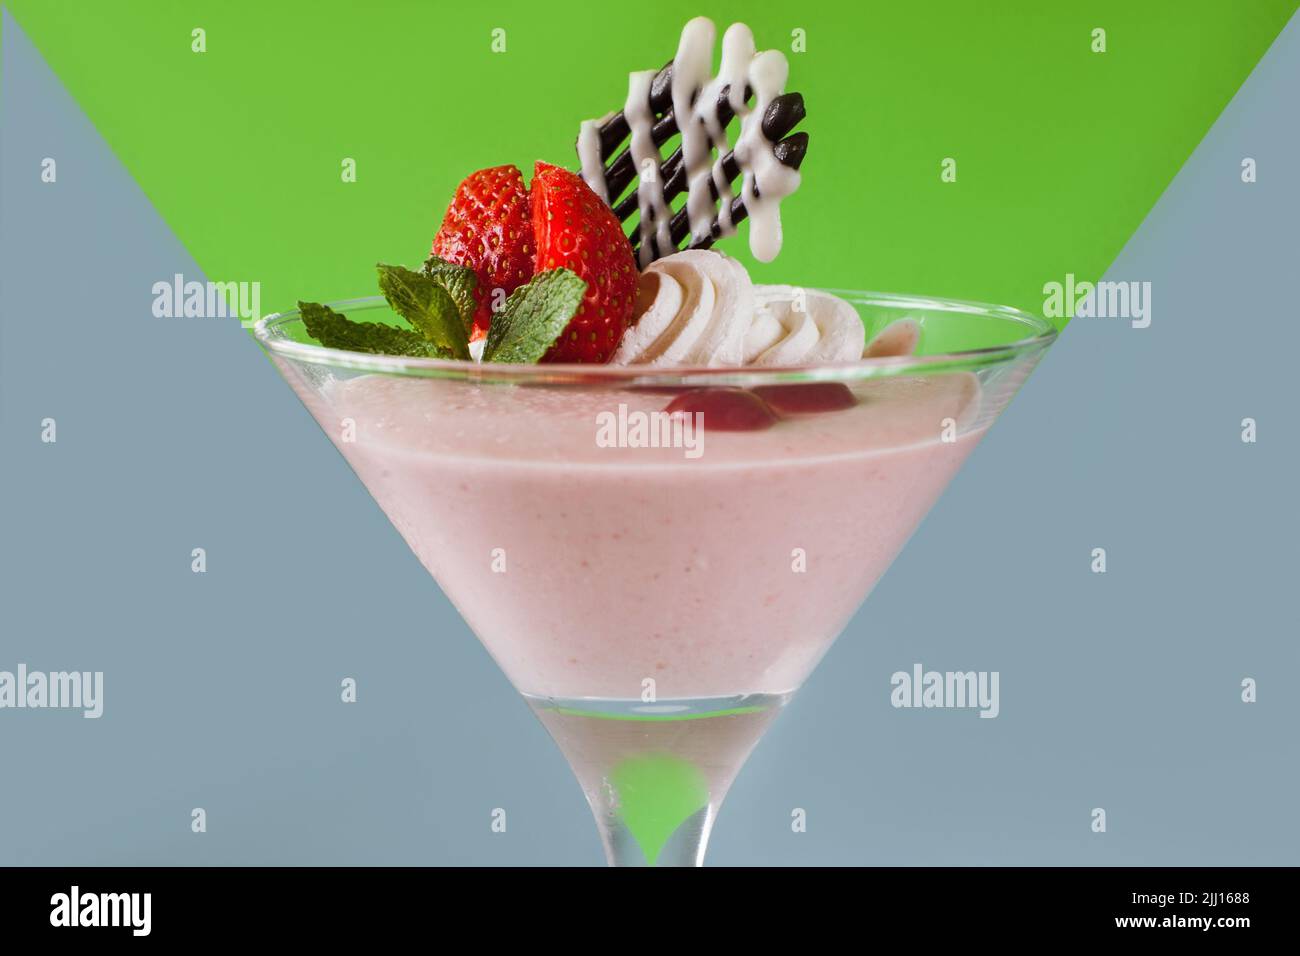 Creamy strawberry dessert on contrast background Stock Photo